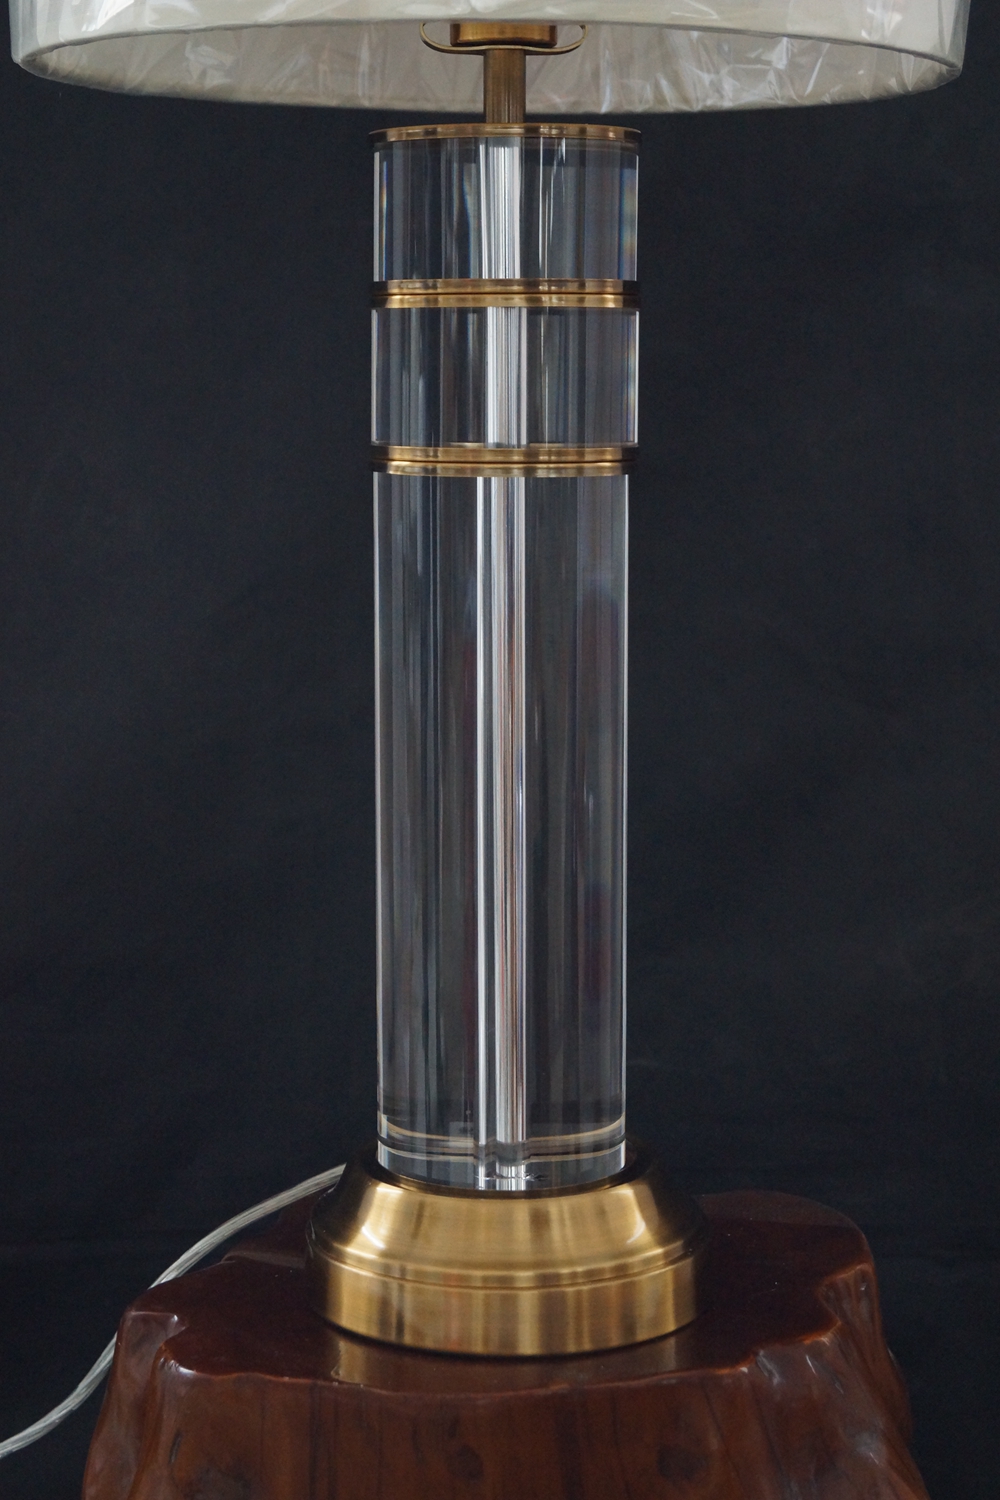 Home Decoration Modern Crystal Table Lamp (KAT6114)